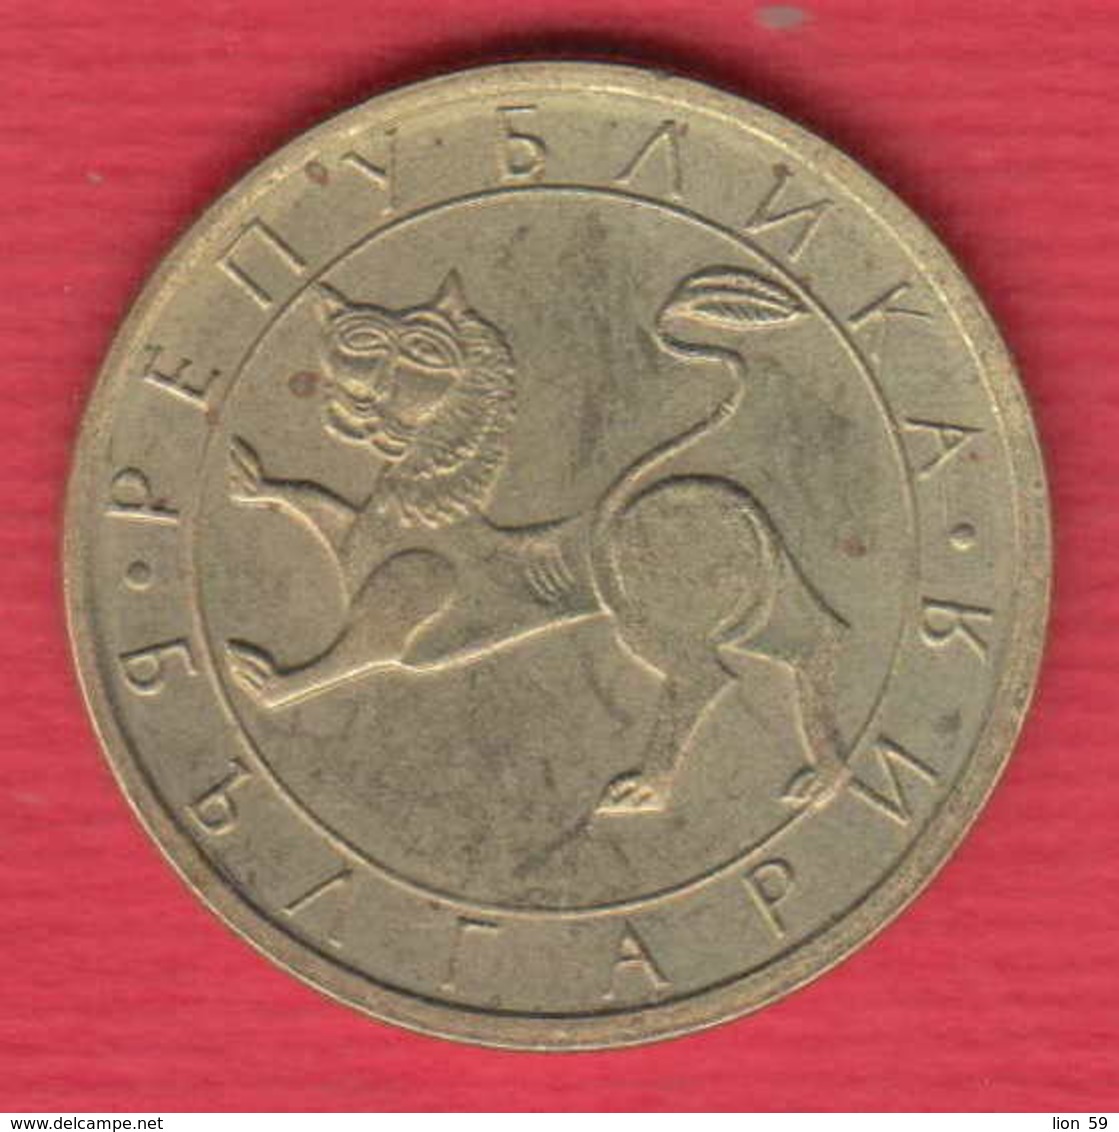 F7515 / - 50 Stotinki - 1992 - Bulgaria Bulgarie Bulgarien Bulgarije FISH SUN ANIMAL LION , Coins Monnaies Munzen - Bulgarie